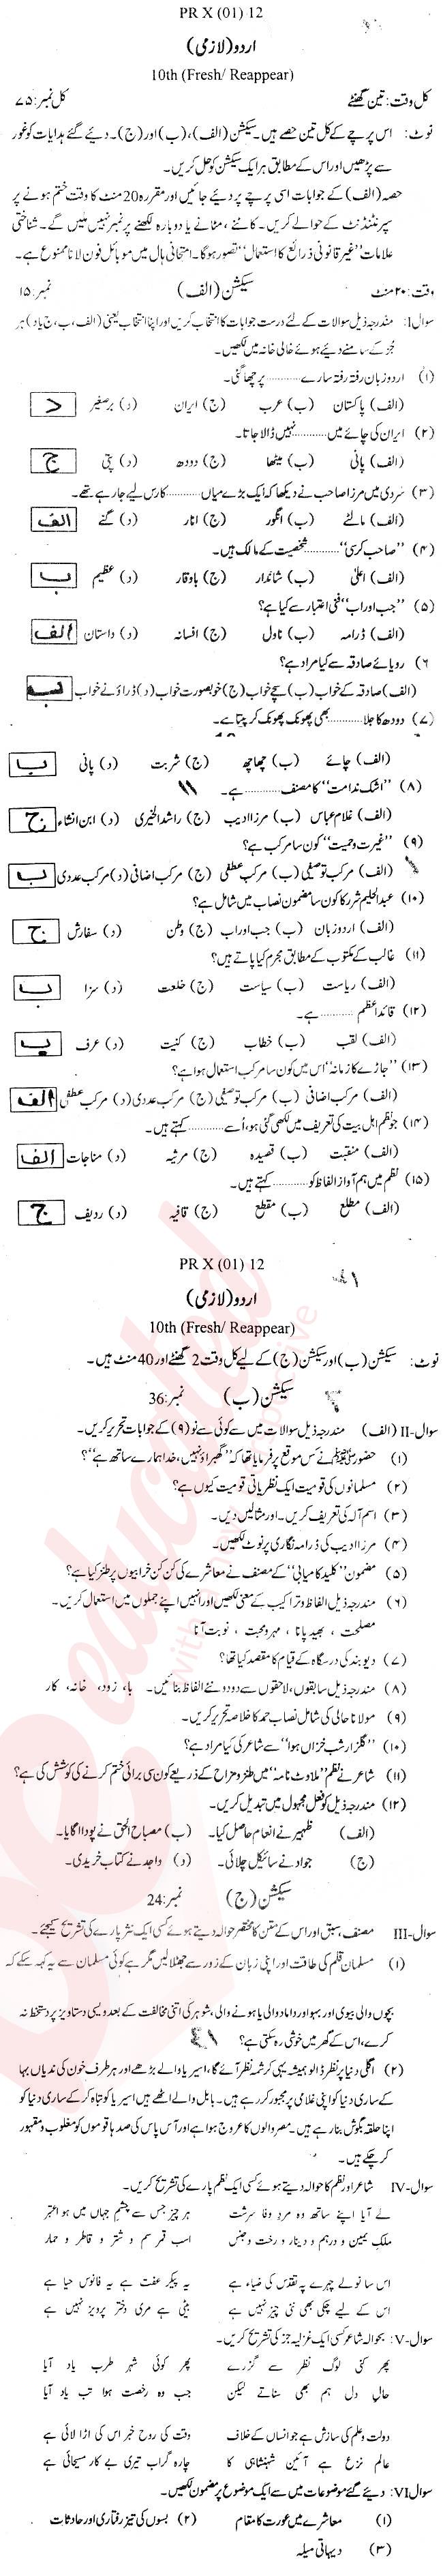 Urdu 10th Urdu Medium Past Paper Group 1 BISE Peshawar 2012